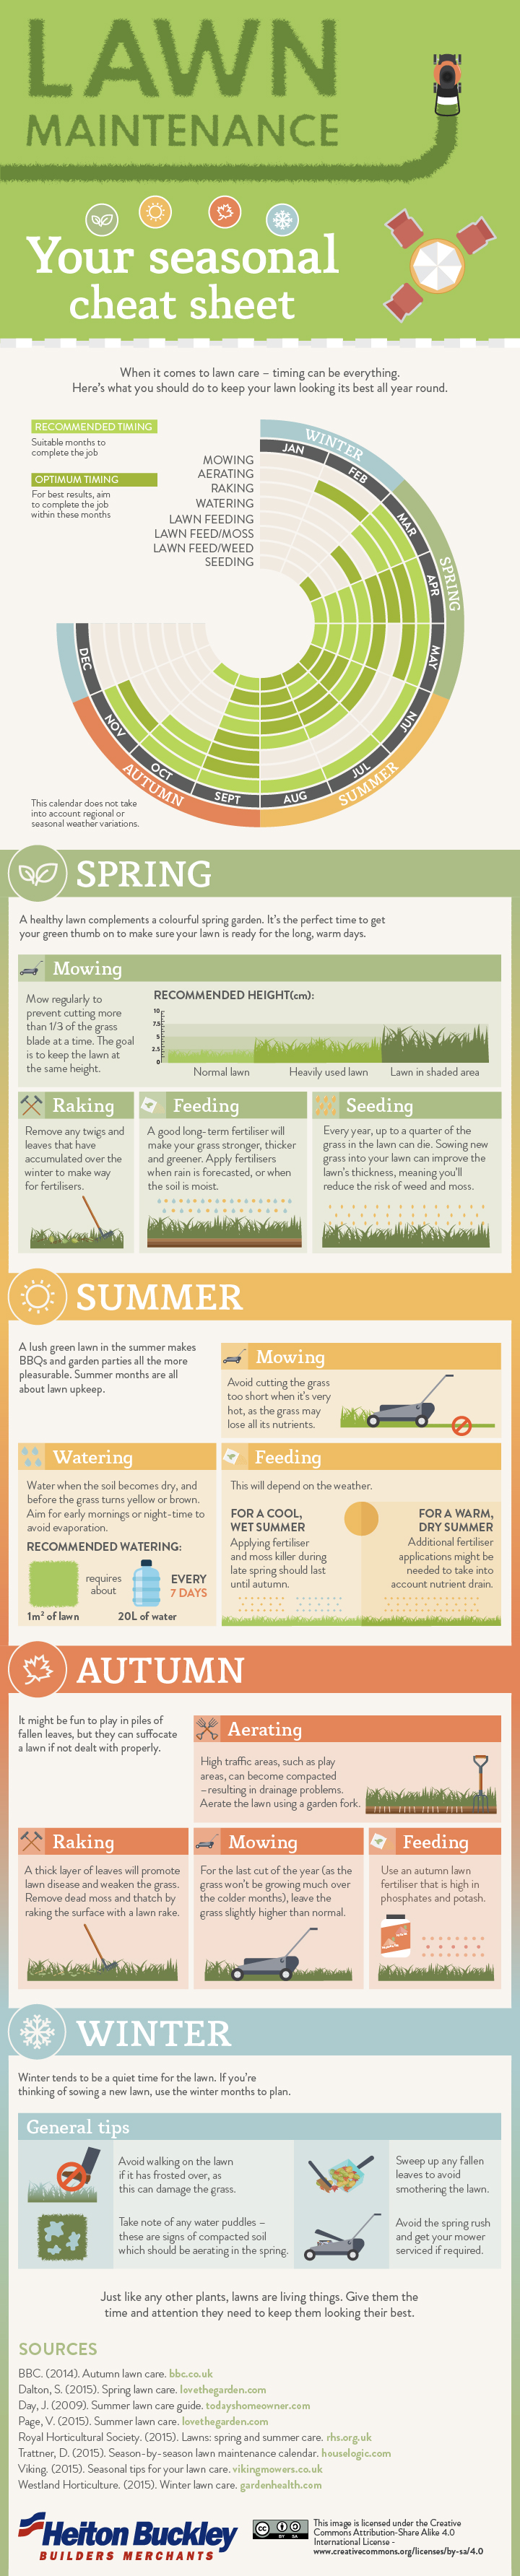 Lawn Maintenance Your Seasonal Cheat Sheet